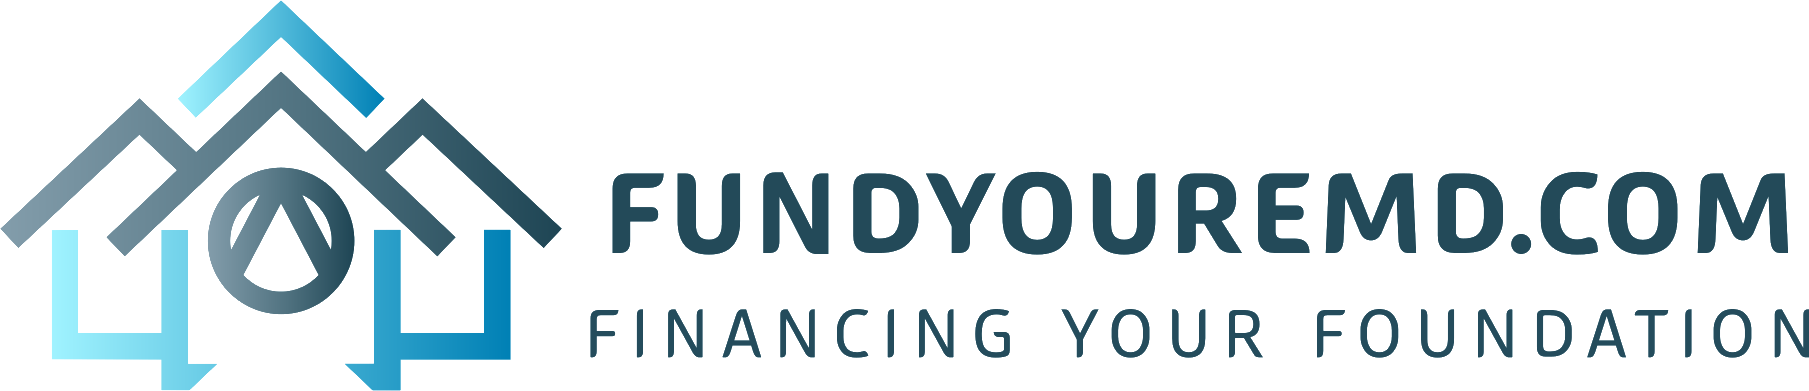 Fund Your EMD Logo